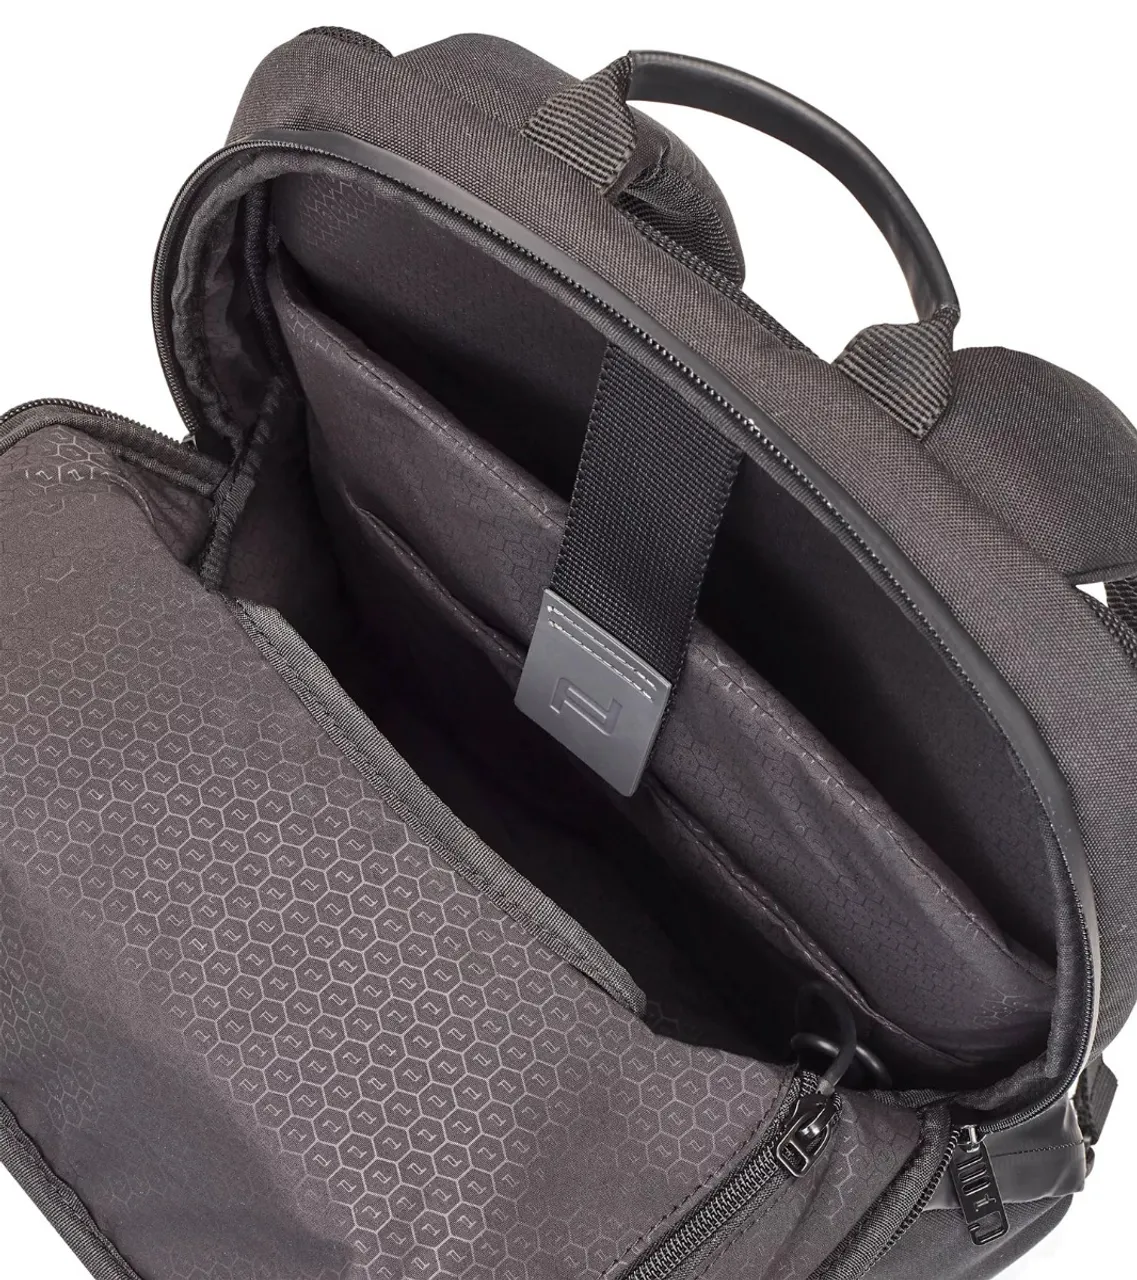 PORSCHE DESIGN Urban Eco Backpack S black